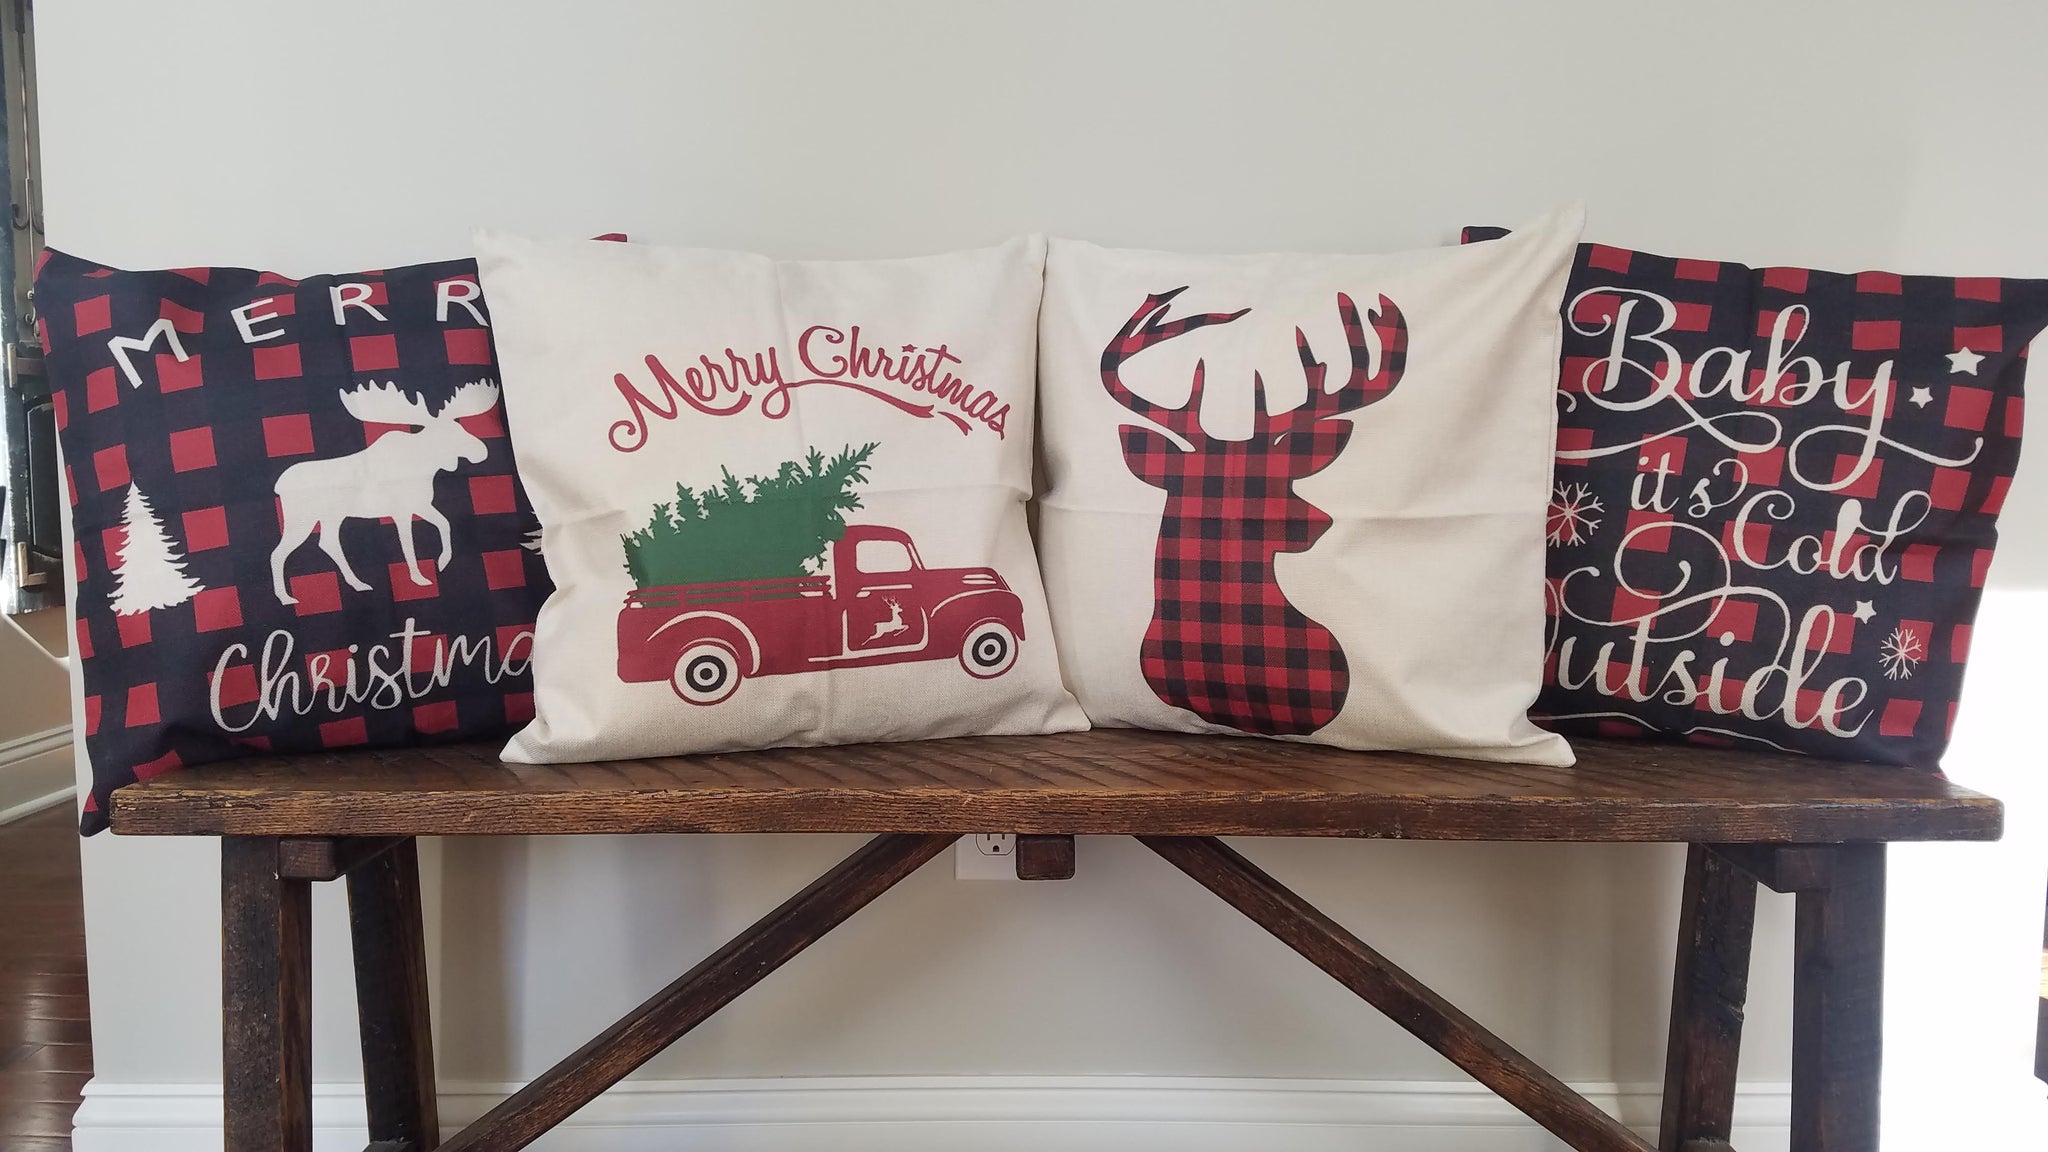 Dearfoams Merry Christmas Truck Pillow, 20'' x 20'', Dog and Tree